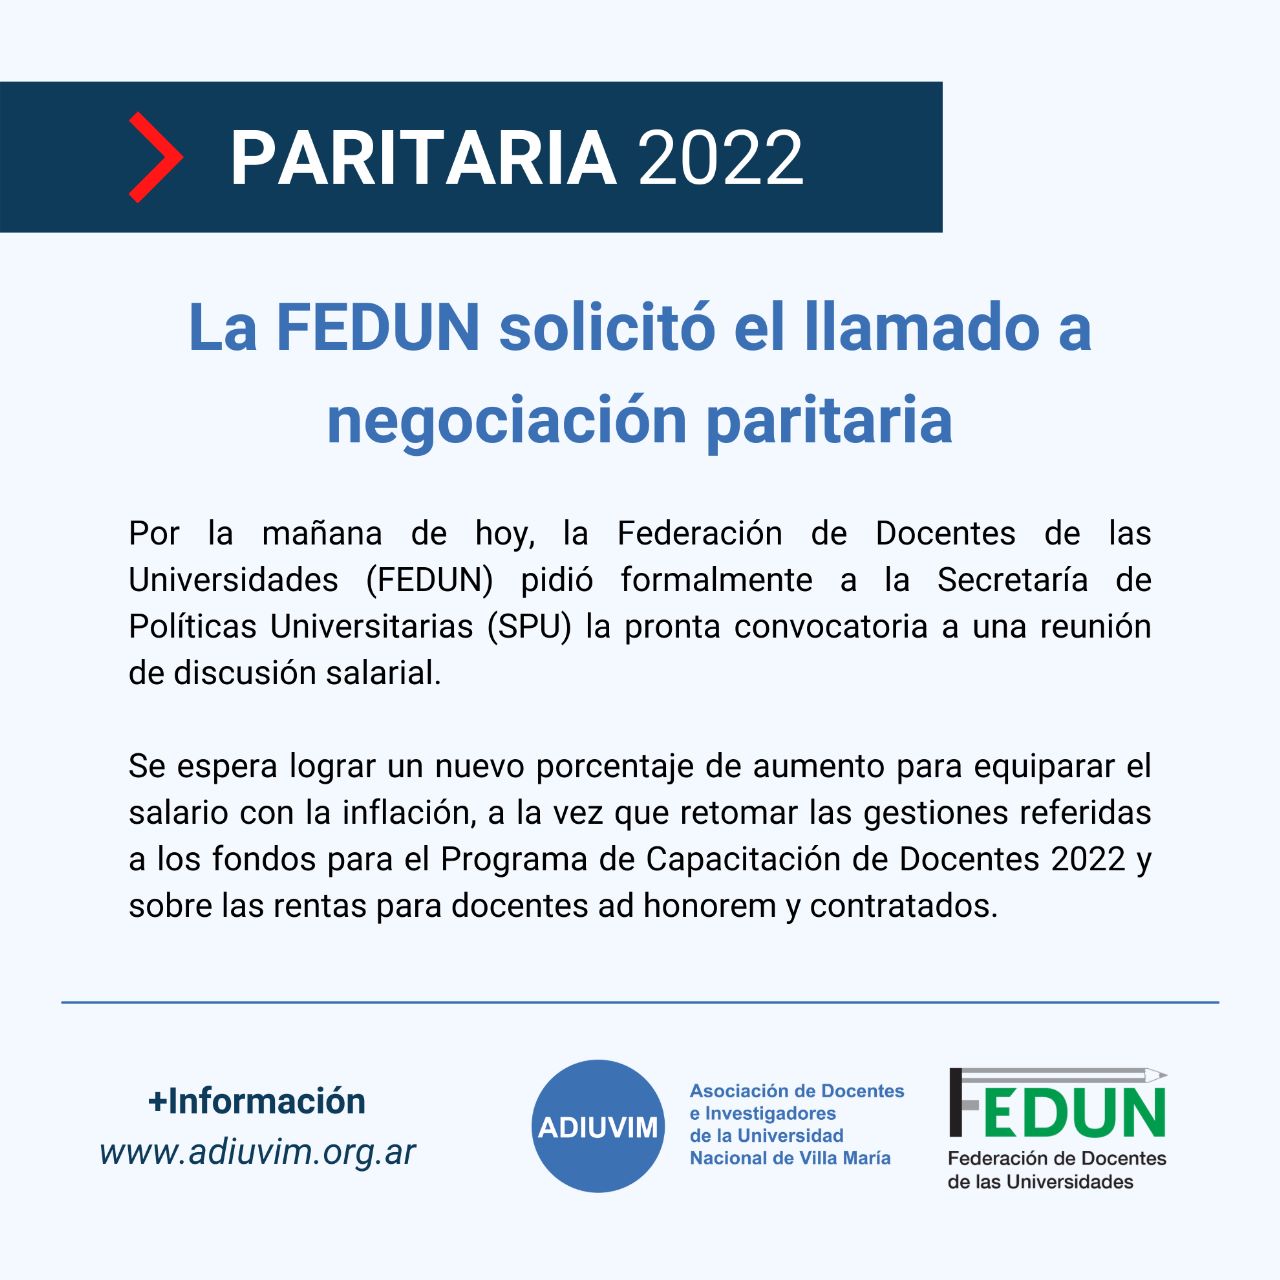 FEDUN solicitó el llamado a negociación paritaria